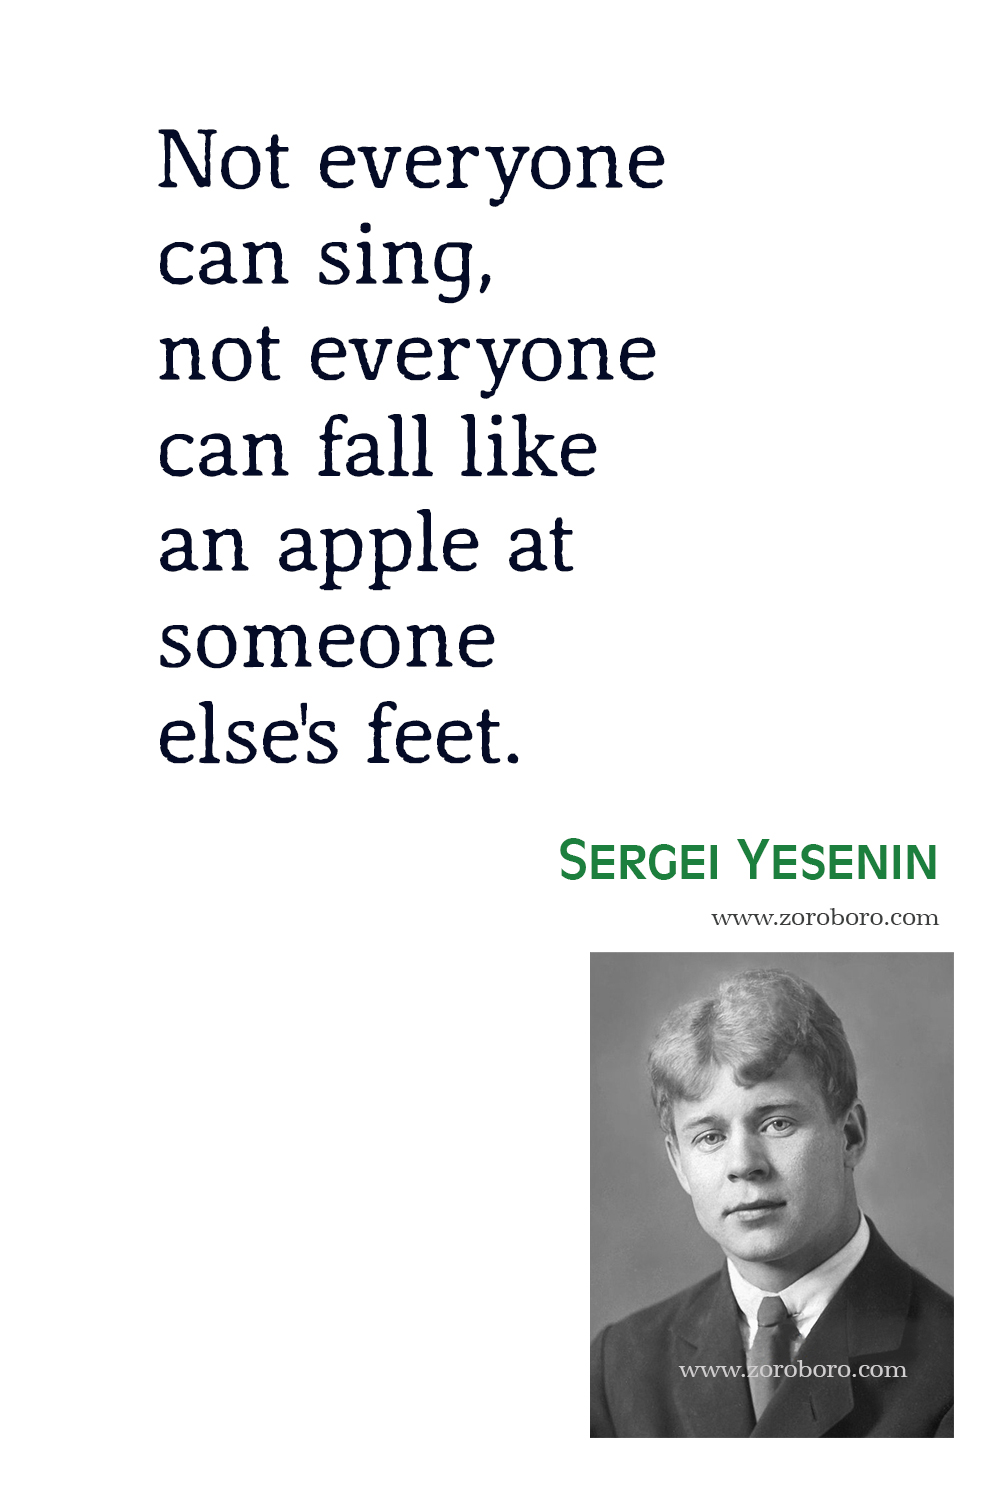 Sergei Yesenin Quotes, Sergei Yesenin Poems, Sergei Yesenin Poetry, Sergei Yesenin Life Poem, Love Poem, Heart Quotes, Sergei Yesenin Quotes.